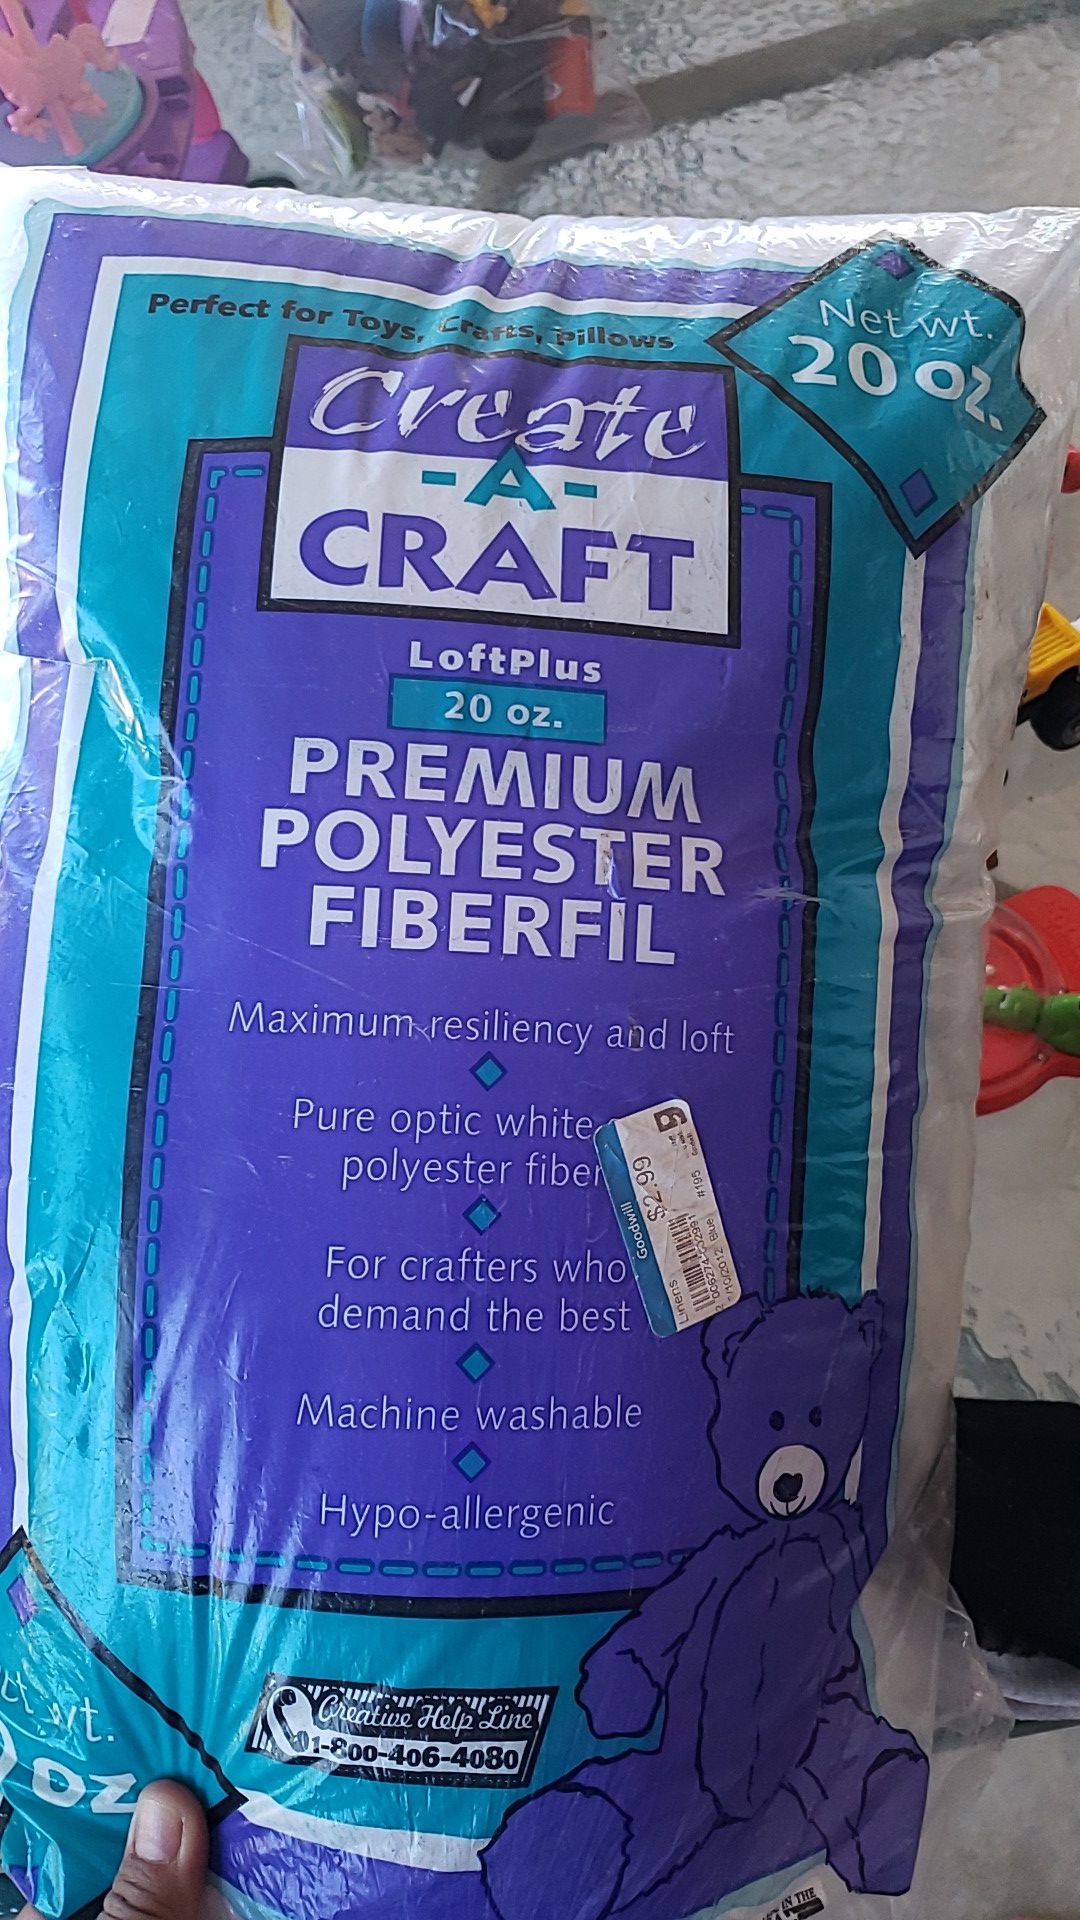 Free polyester fiberfil